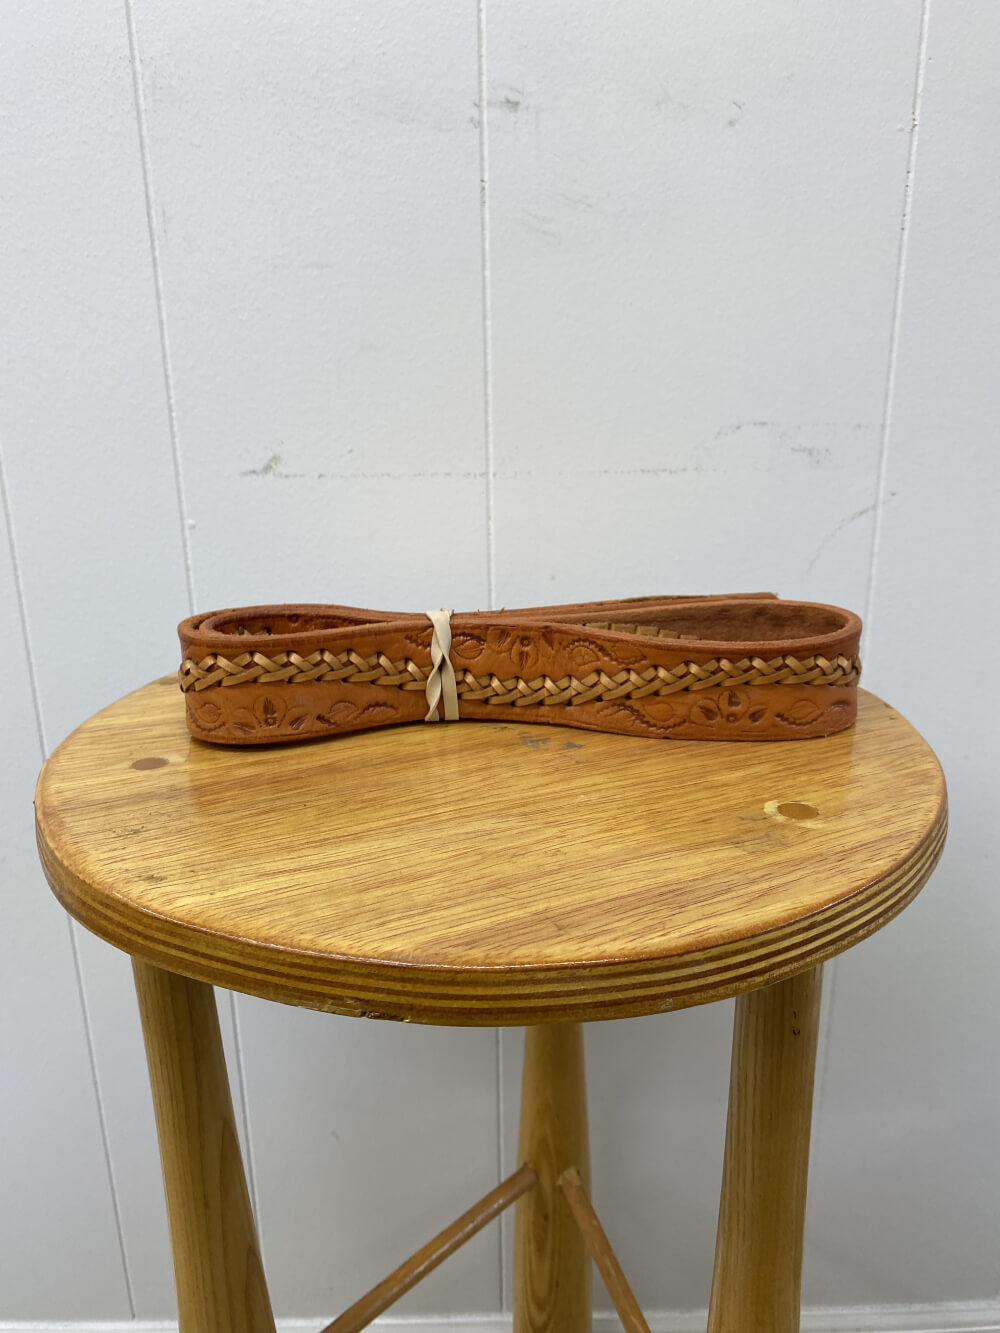 Vintage Brown Leather Belt on a table